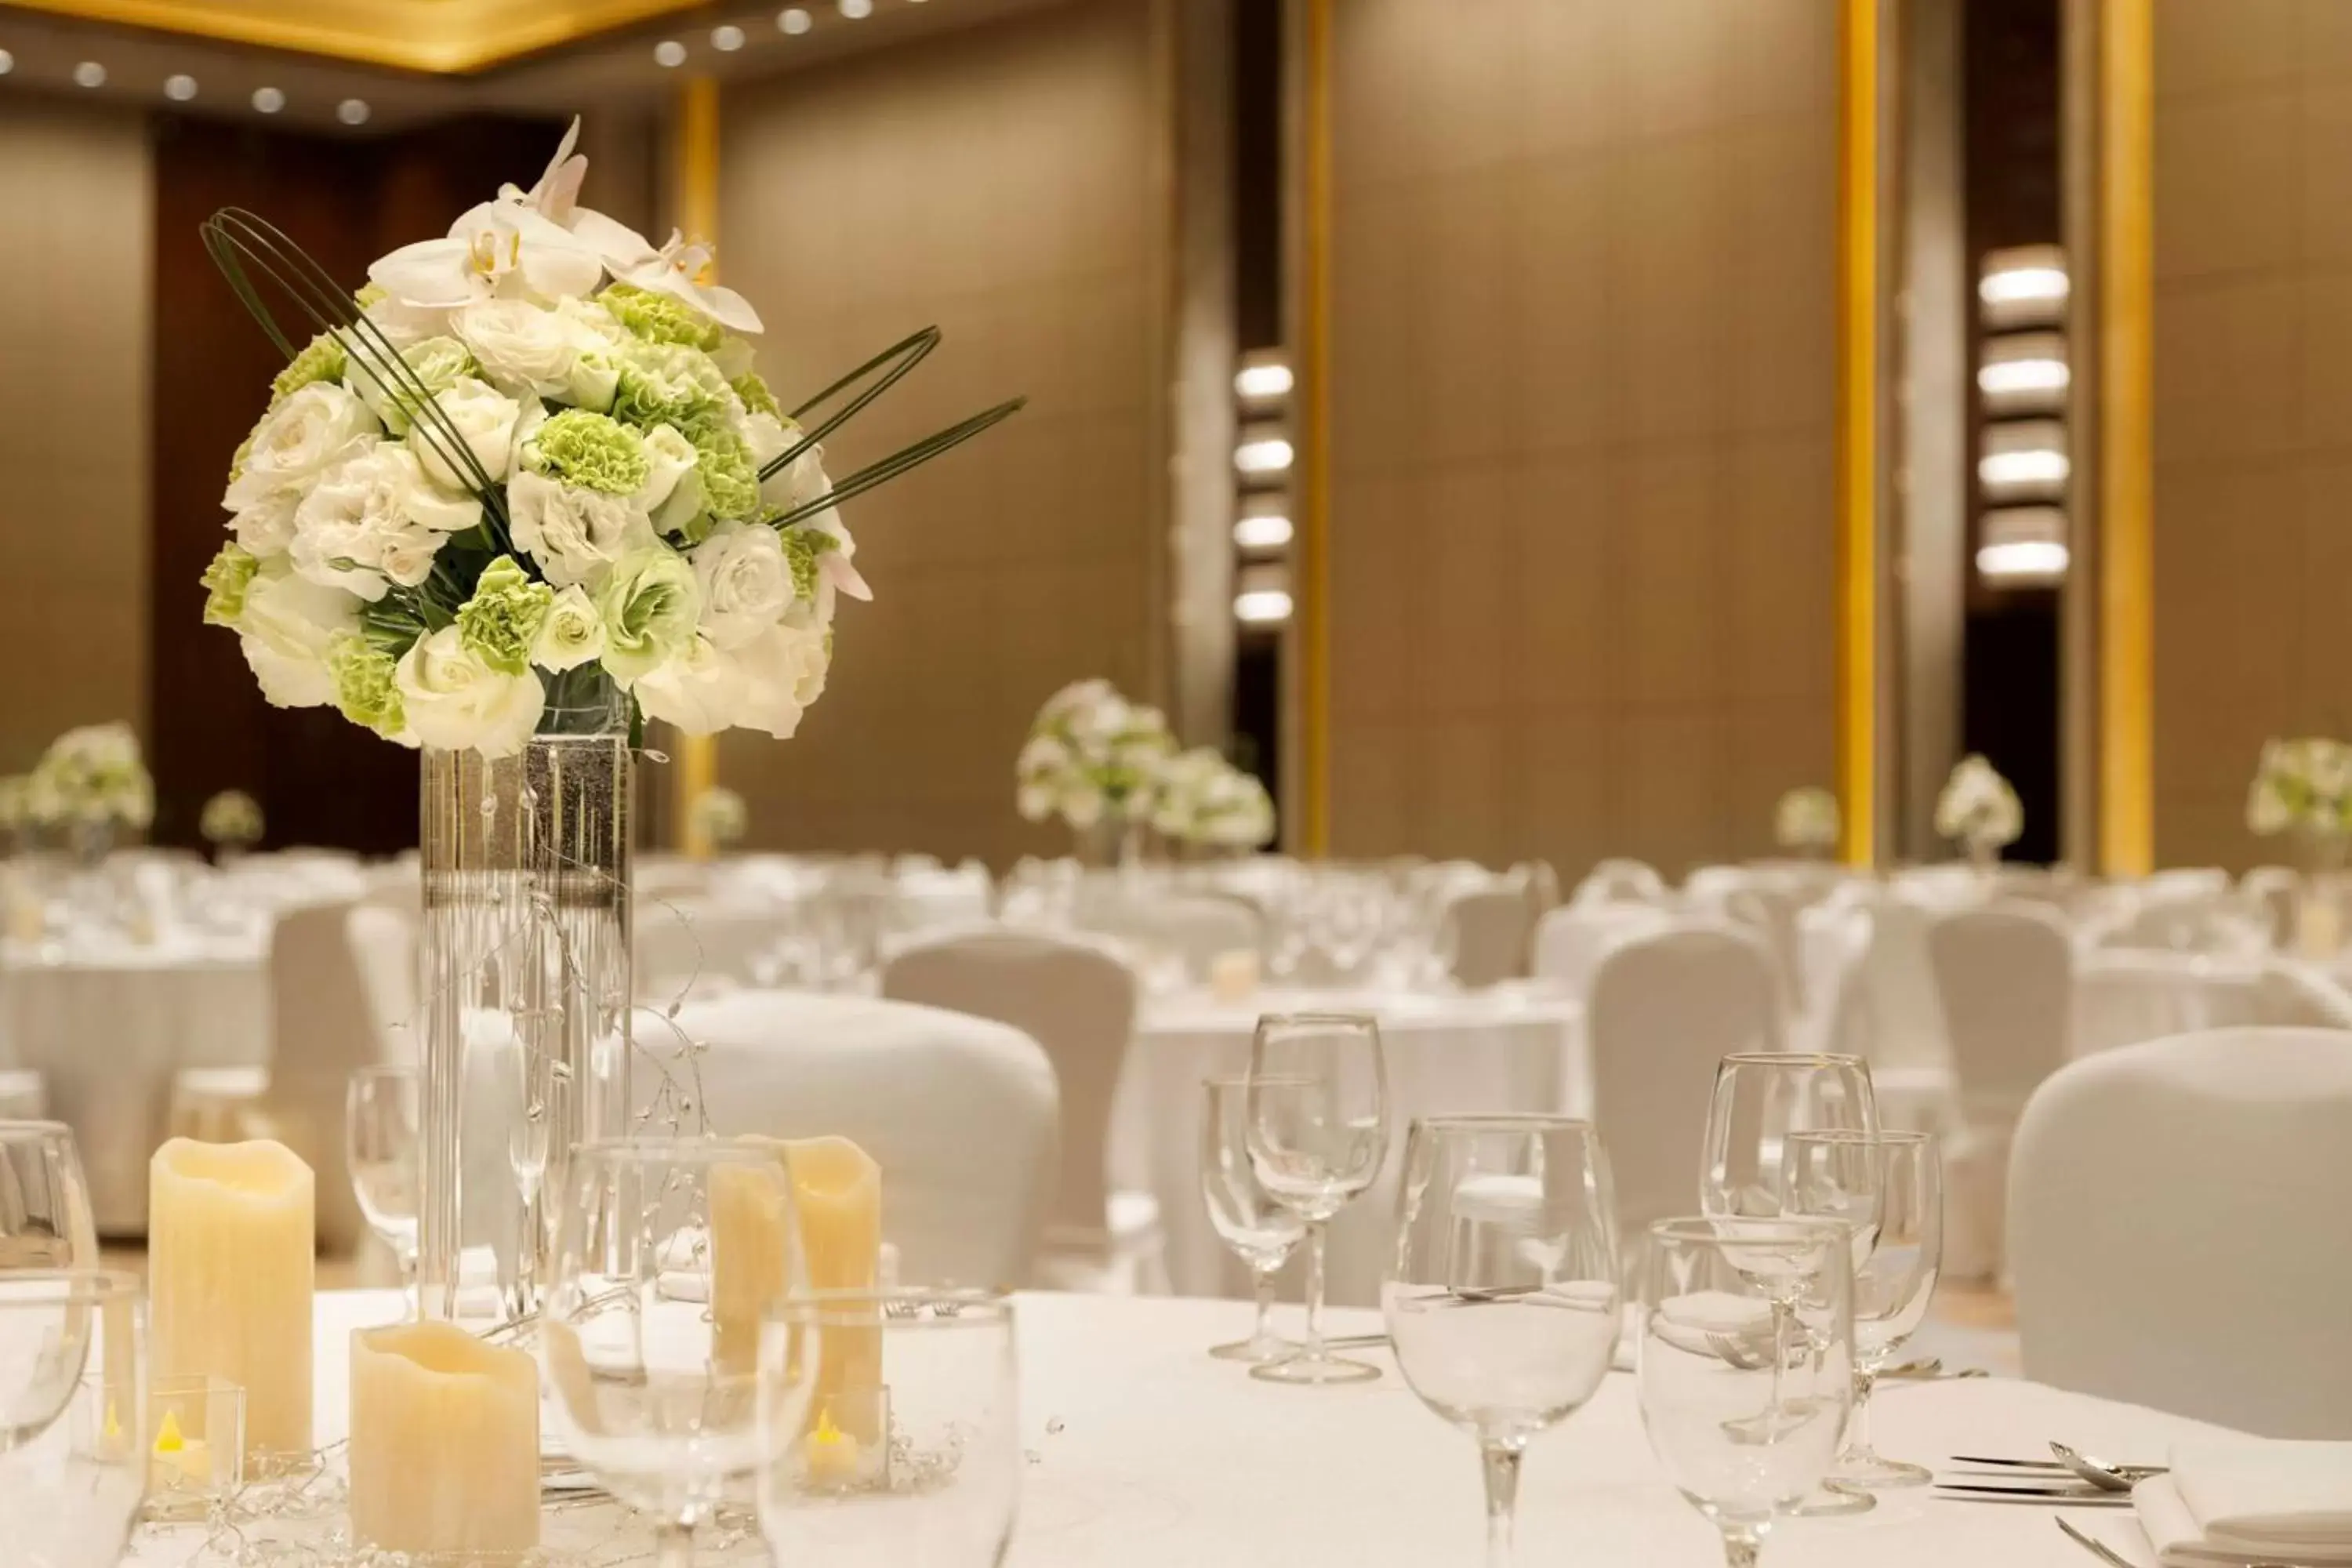 Banquet/Function facilities, Banquet Facilities in Kempinski Hotel Fuzhou